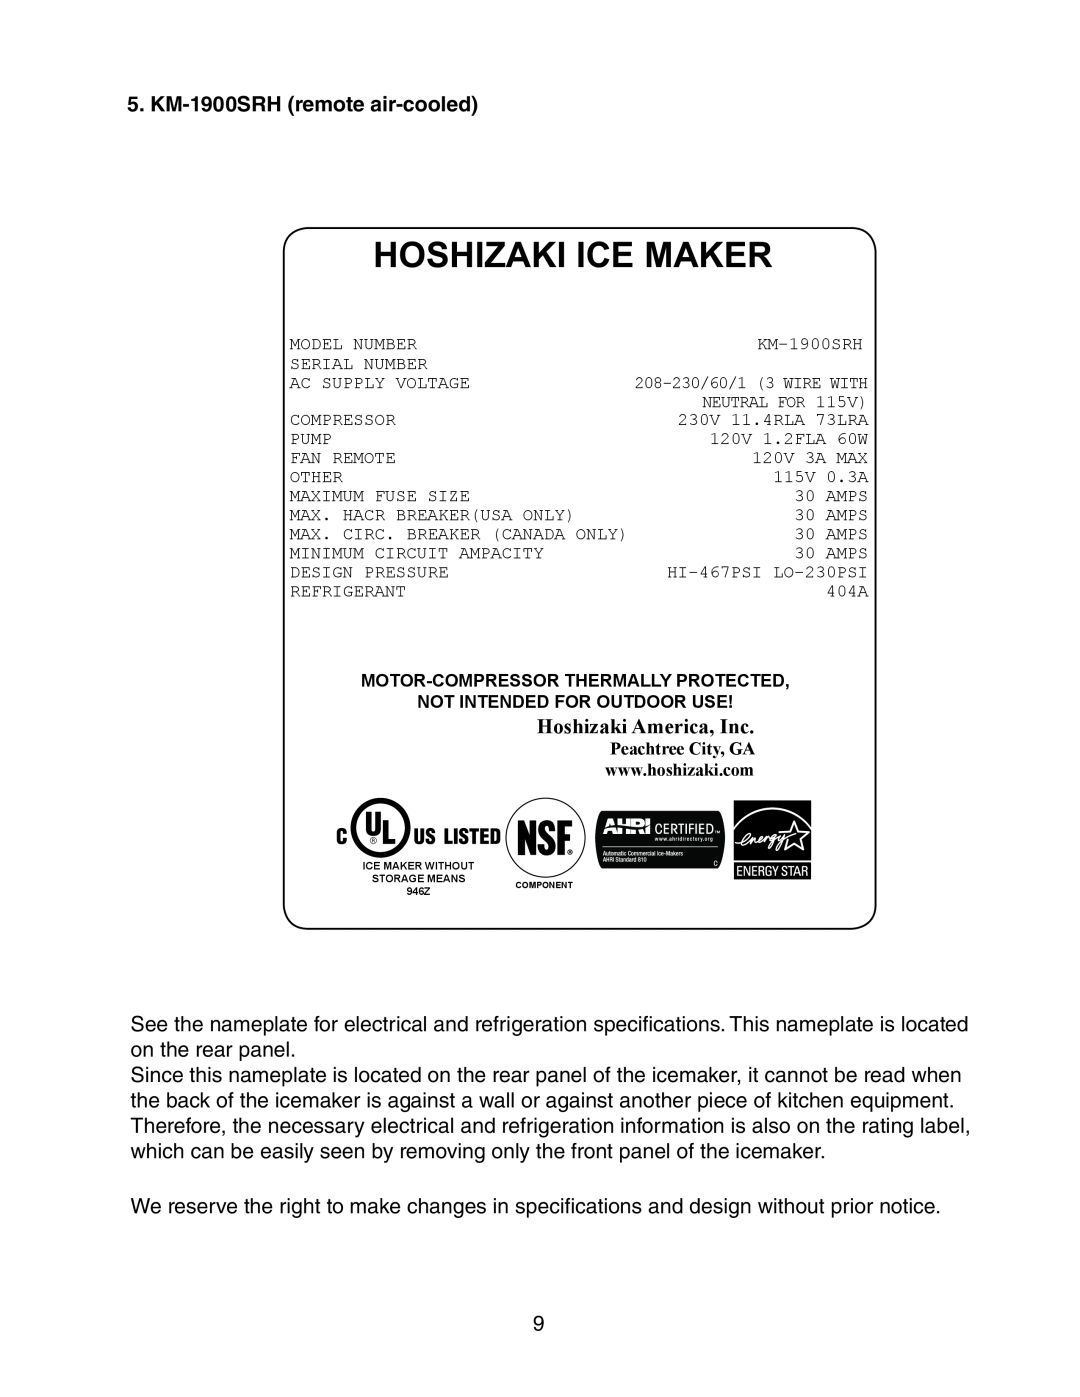 Hoshizaki KM-1900SRH/3, KM-1900SAH/3, KM-1900SWH/3 KM-1900SRHremote air-cooled, Hoshizaki Ice Maker, Hoshizaki America, Inc 